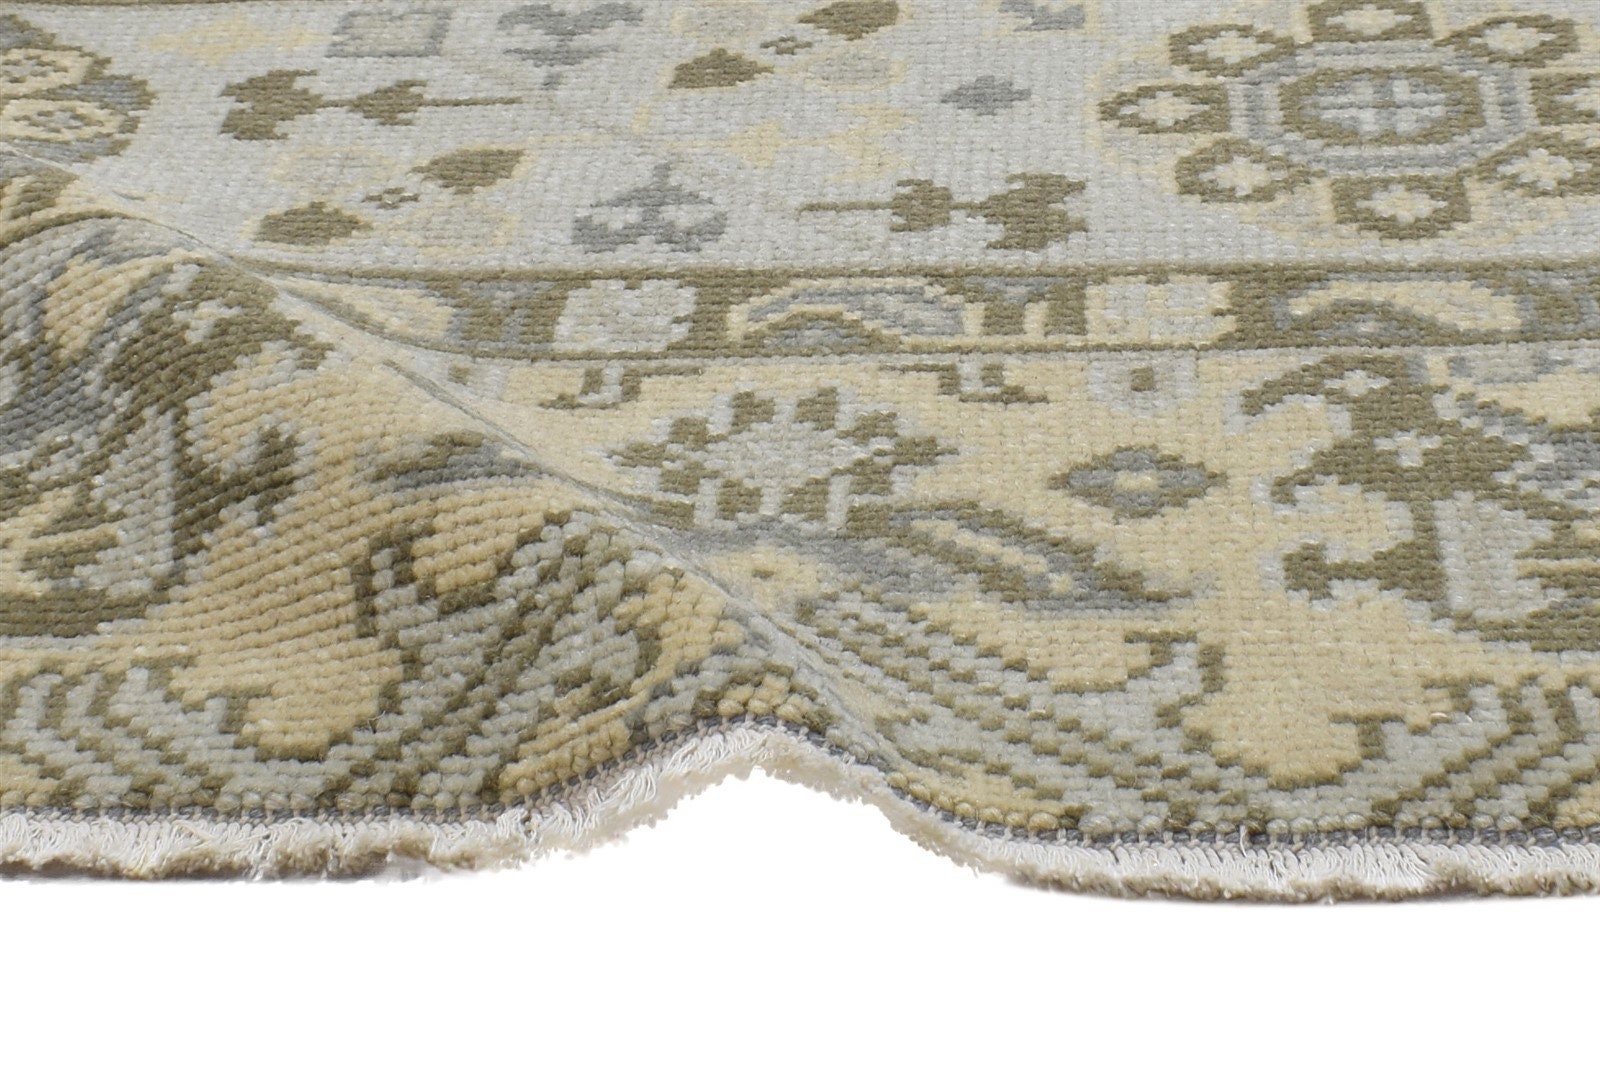 Ra handloom carpet Gold Silk Carpet - Buy Ra handloom carpet Gold